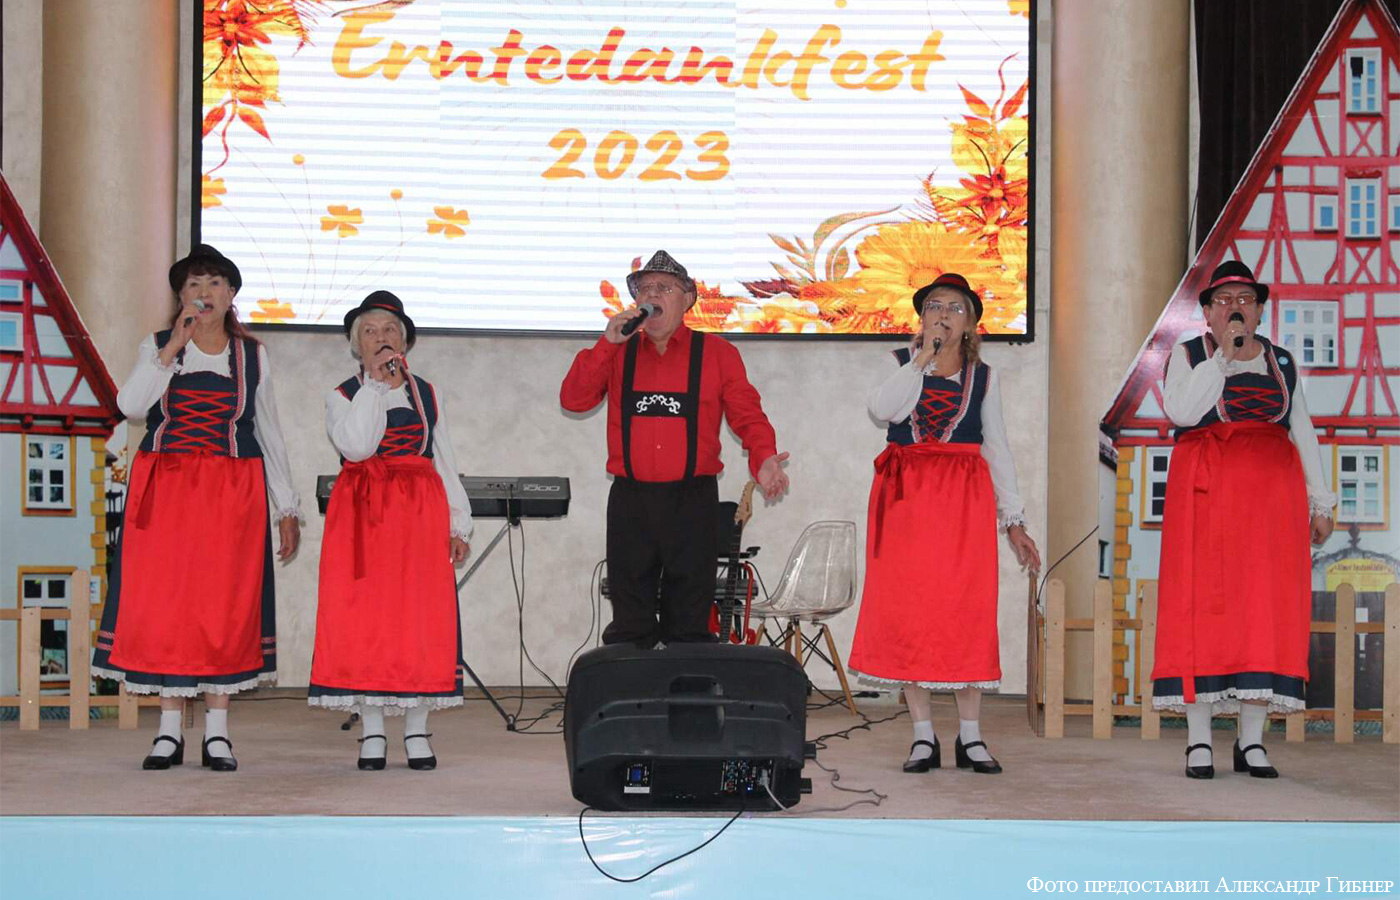 Erntedankfest — праздник урожая в Таразе